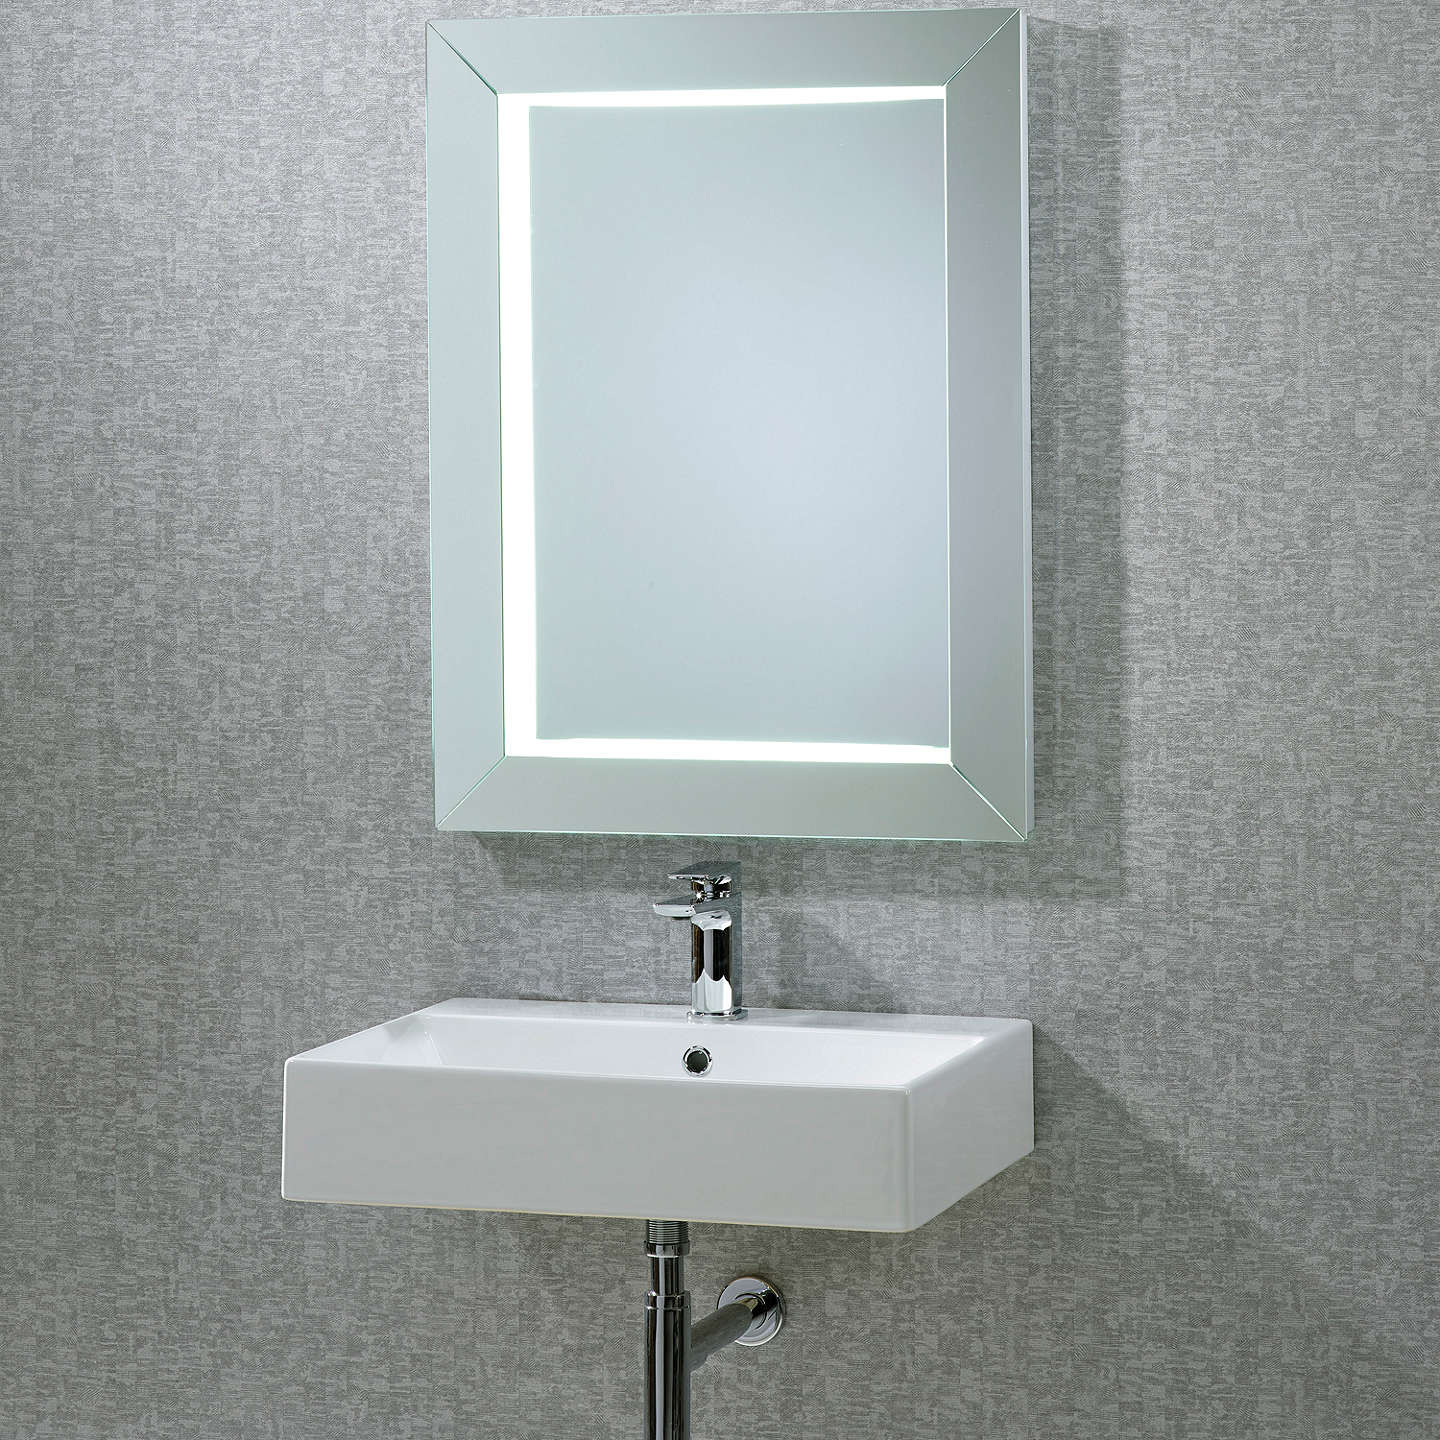 Bathroom Mirrors Online
 Roper Rhodes Sense Frame Illuminated Bathroom Mirror at